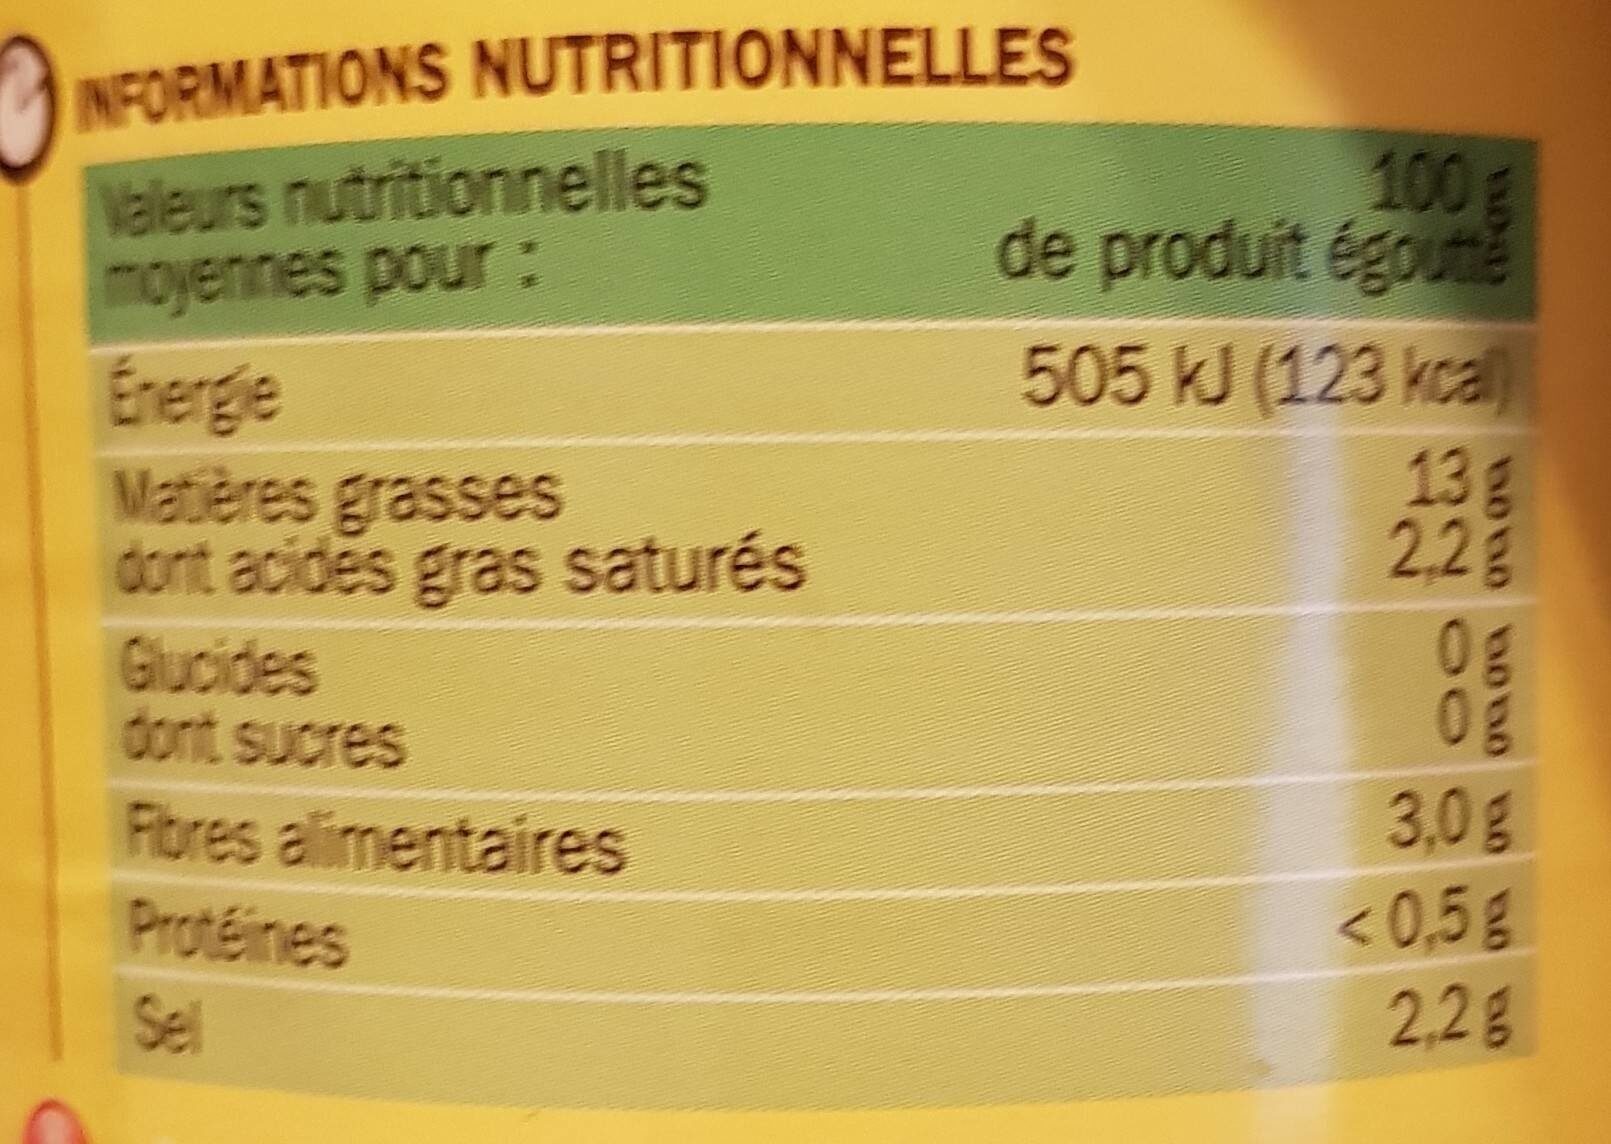 Olives noires denoyautées boîte 180g pne - Nutrition facts - fr